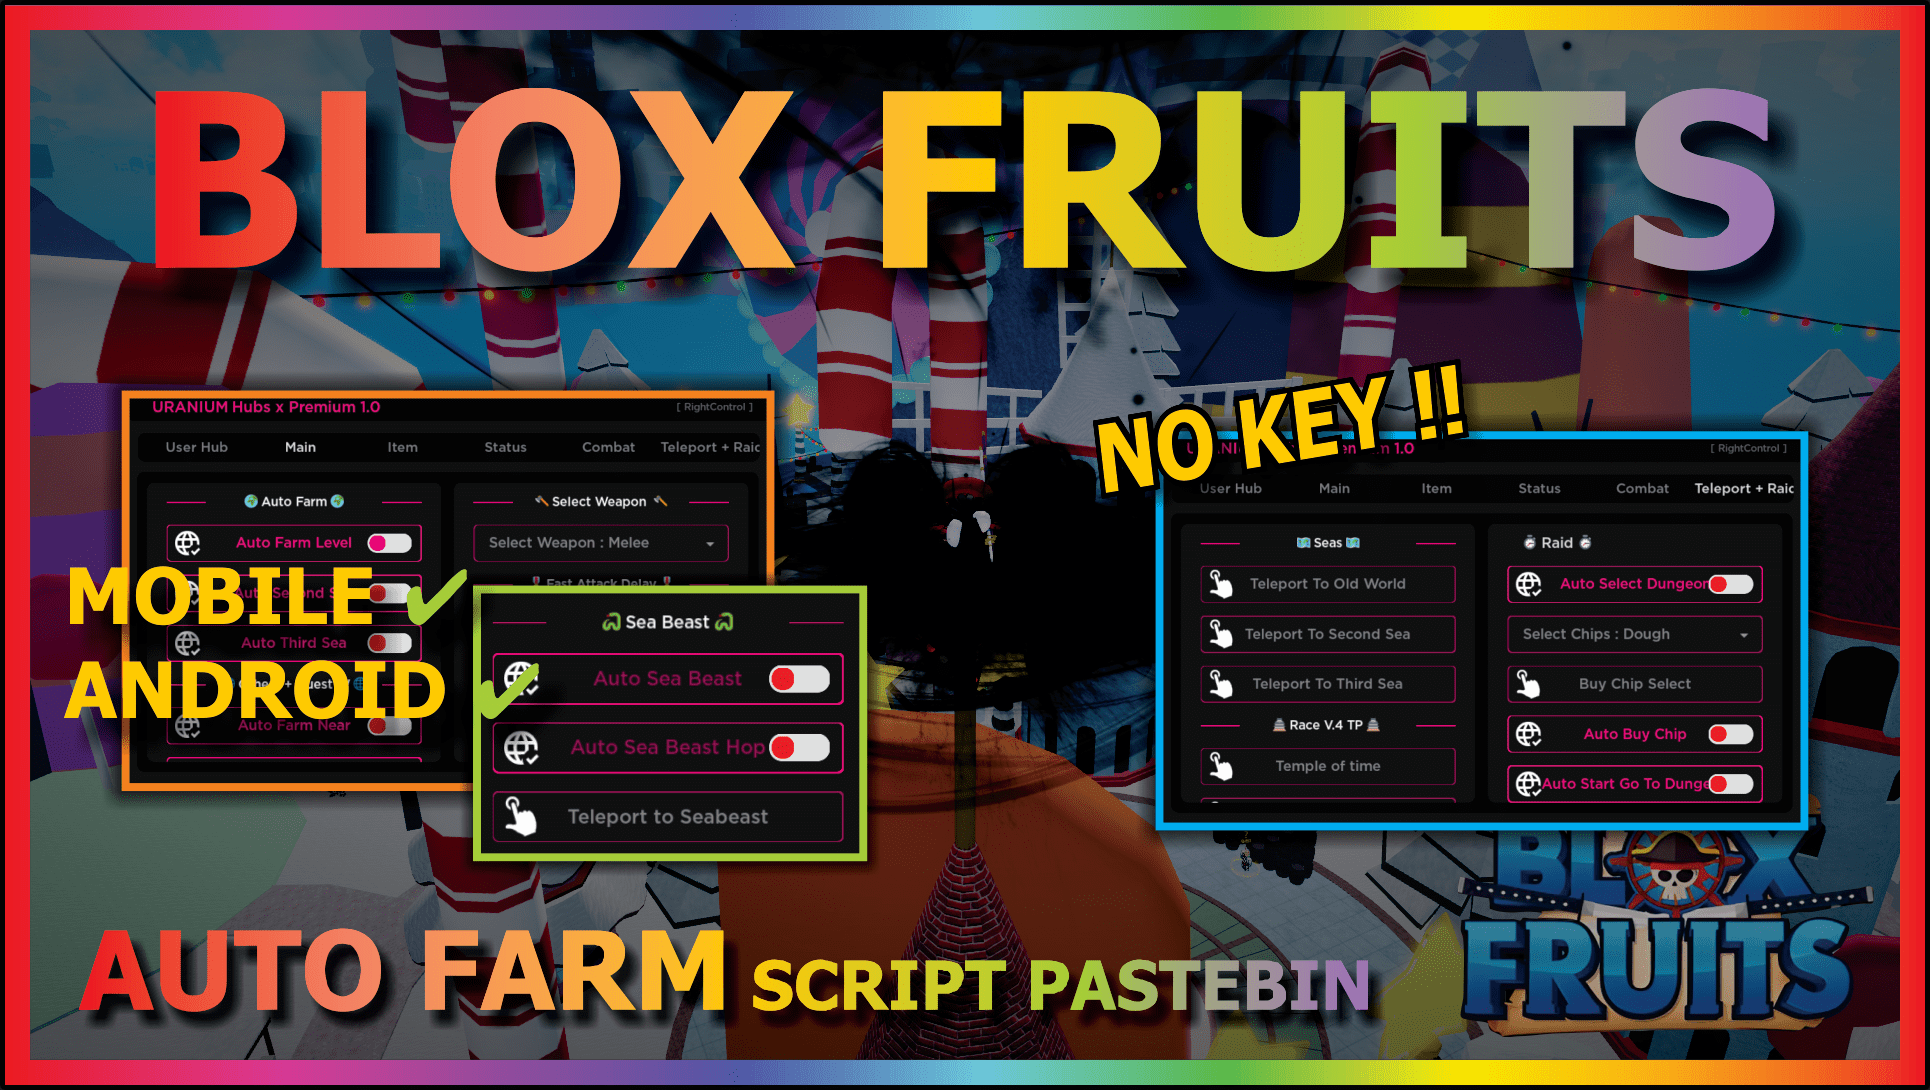 Blox Fruits Mobile Script Uranium Hub